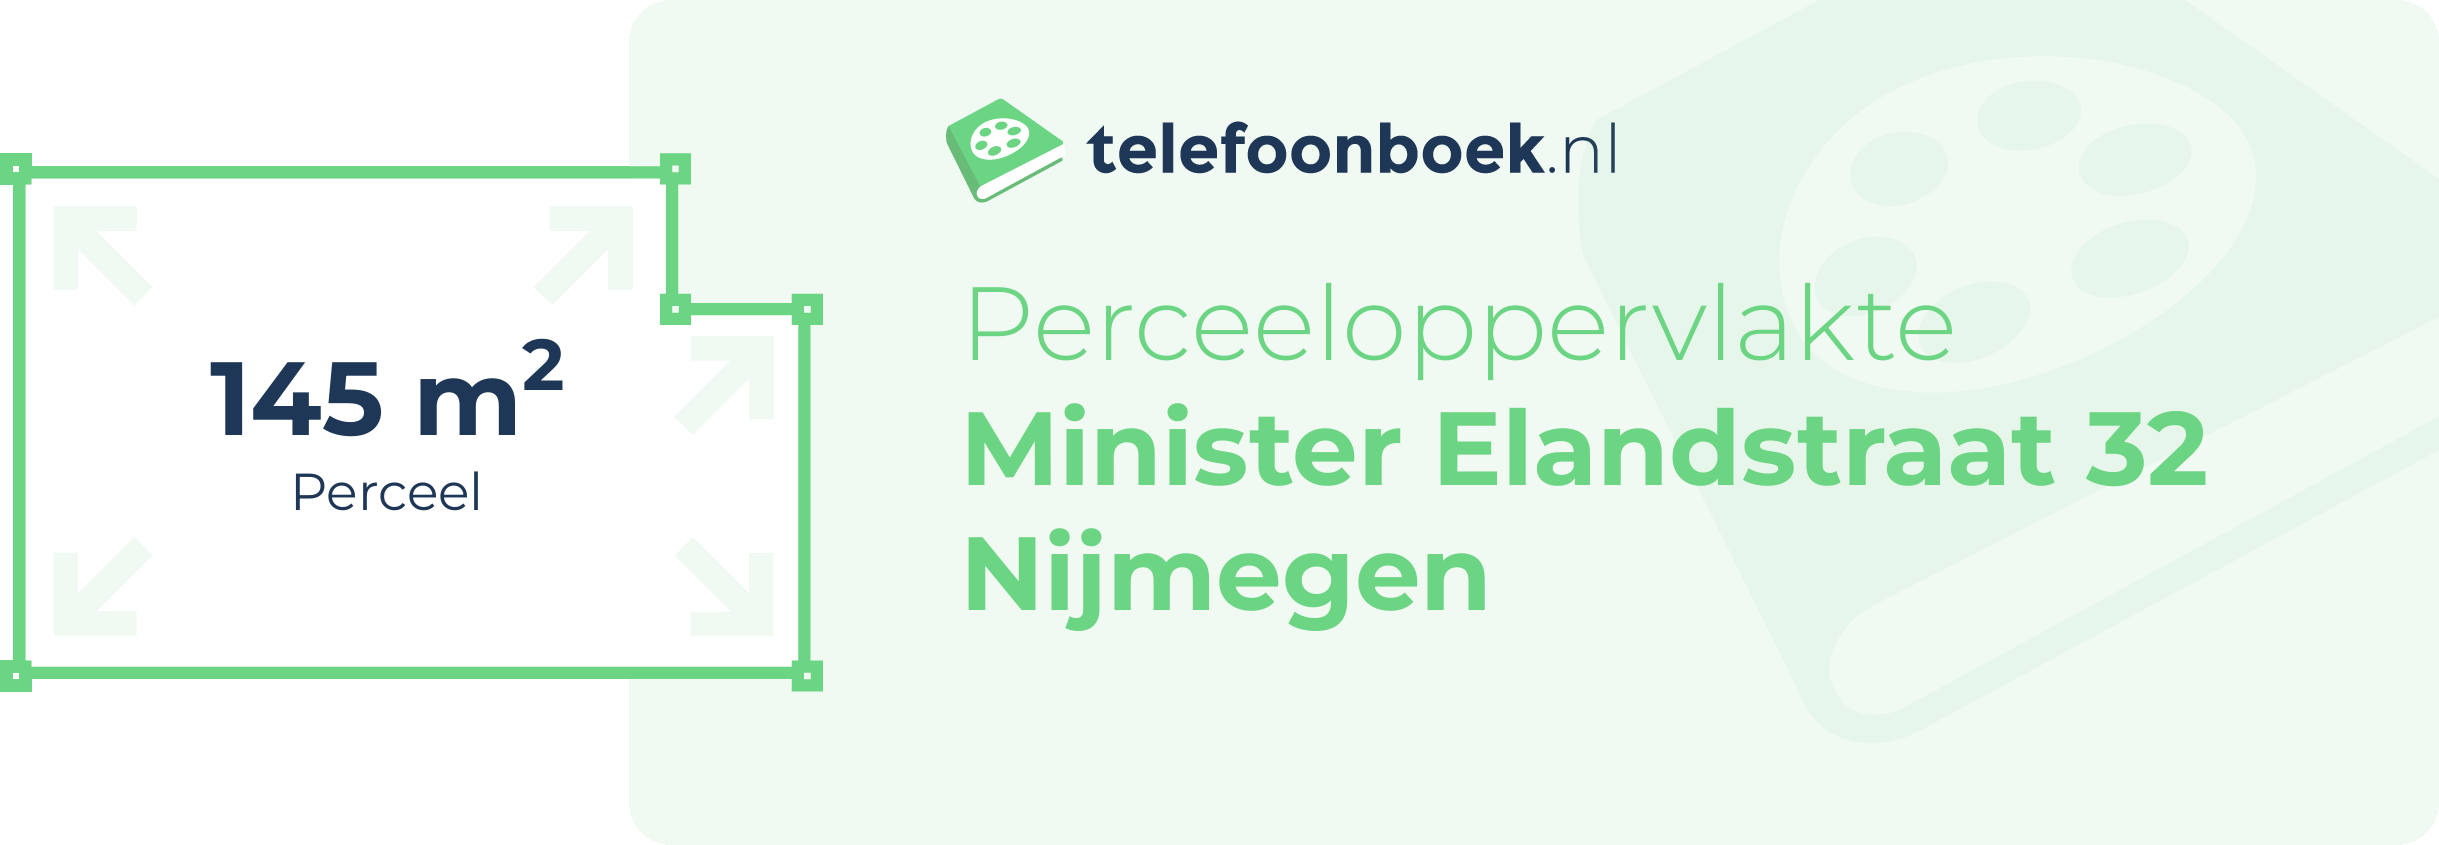 Perceeloppervlakte Minister Elandstraat 32 Nijmegen